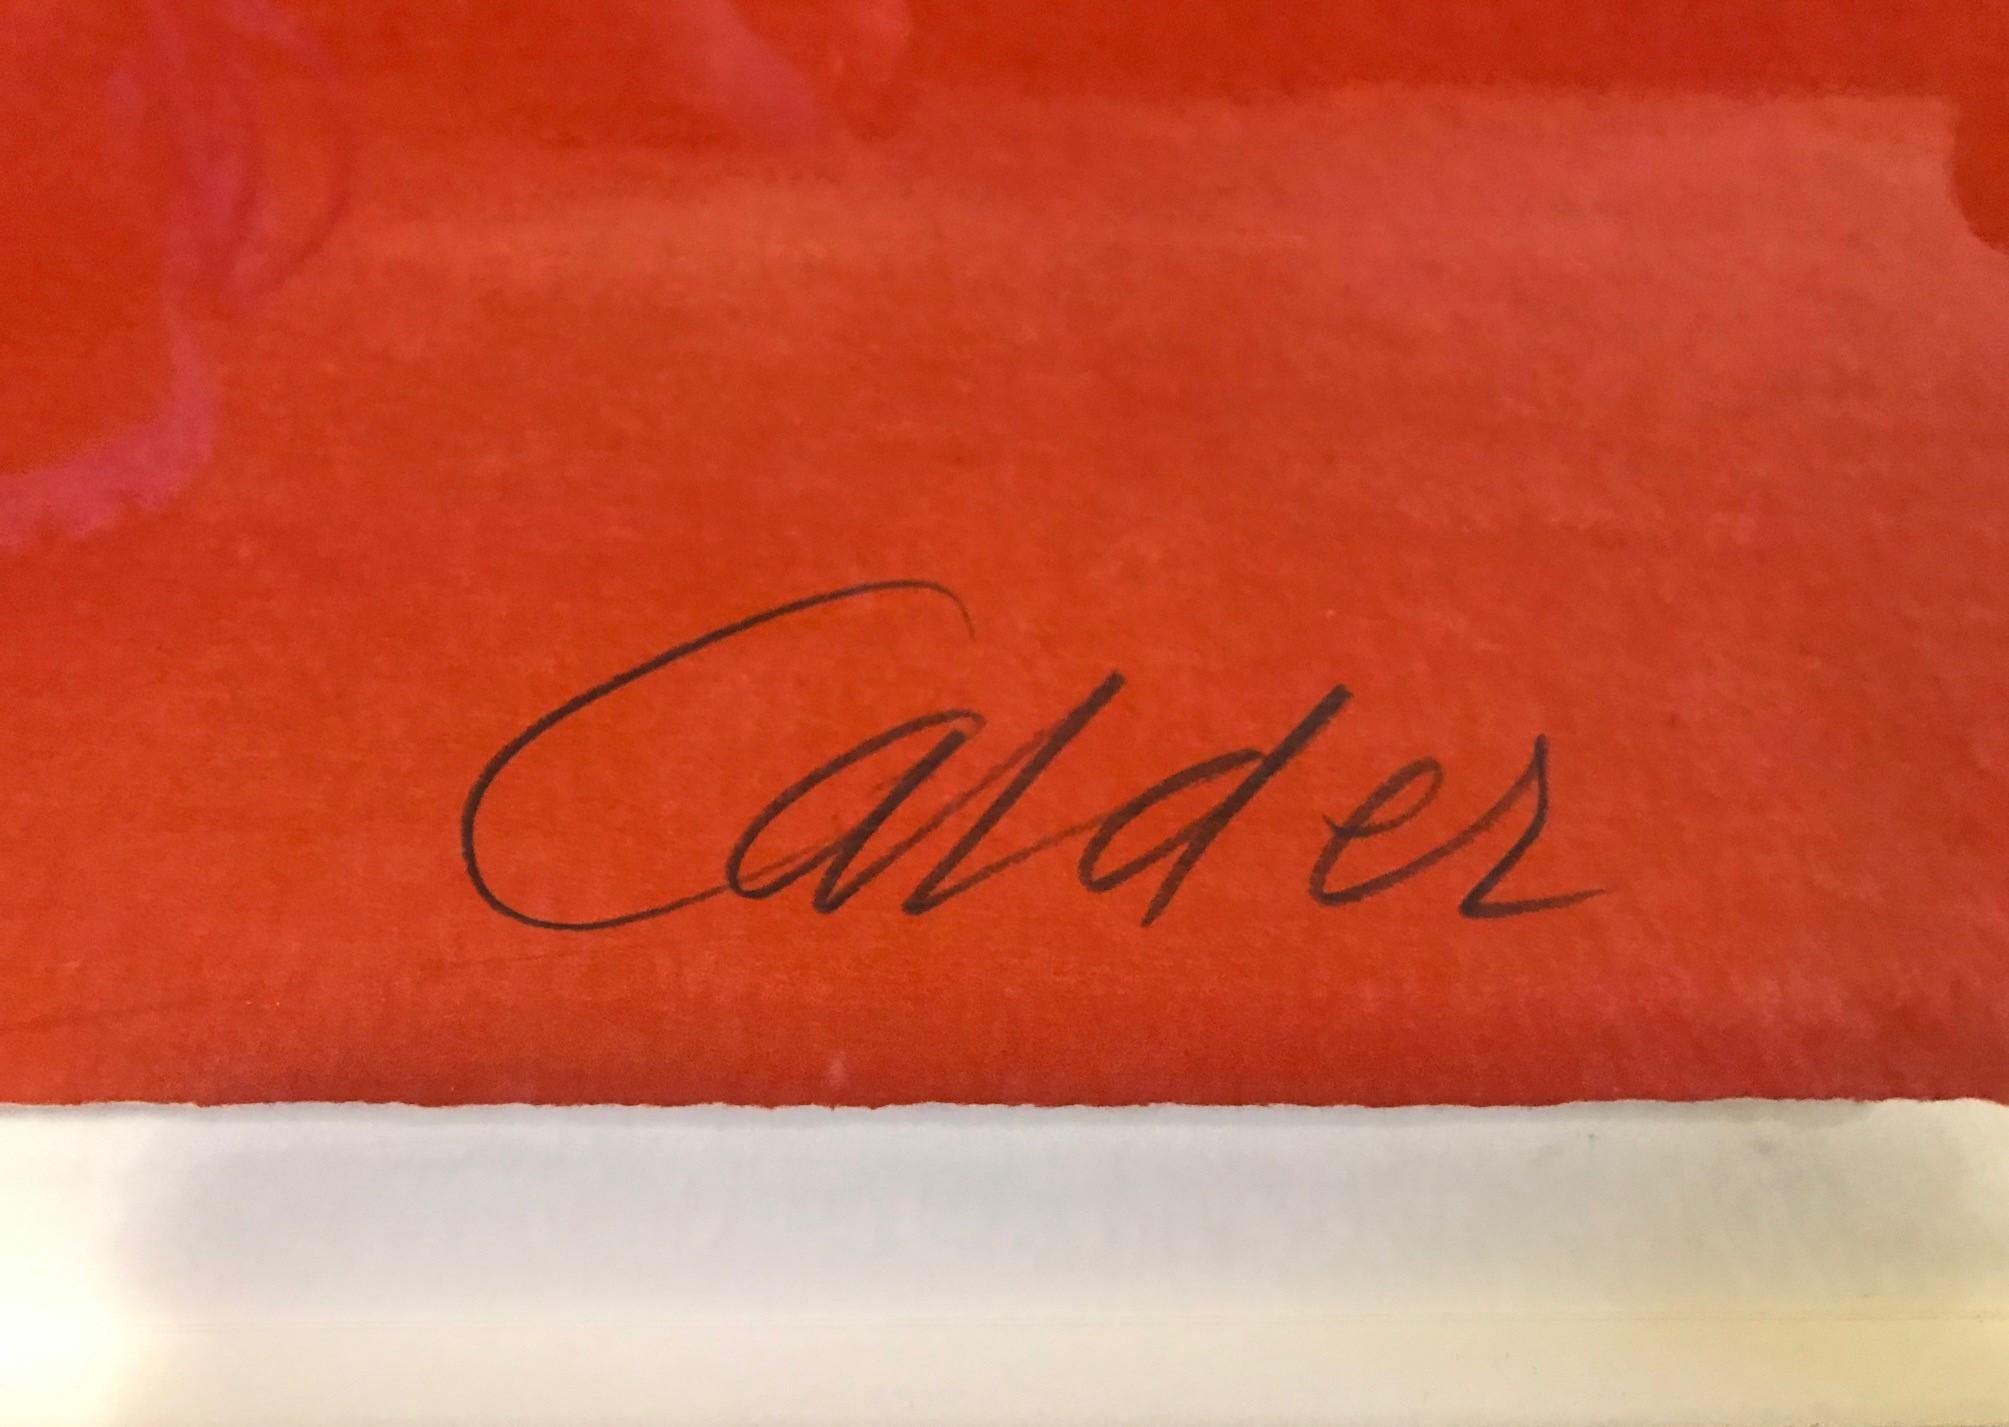 Paper Alexander Calder Limited Edition Signed Lithograph Pyramids at Night, circa 1970